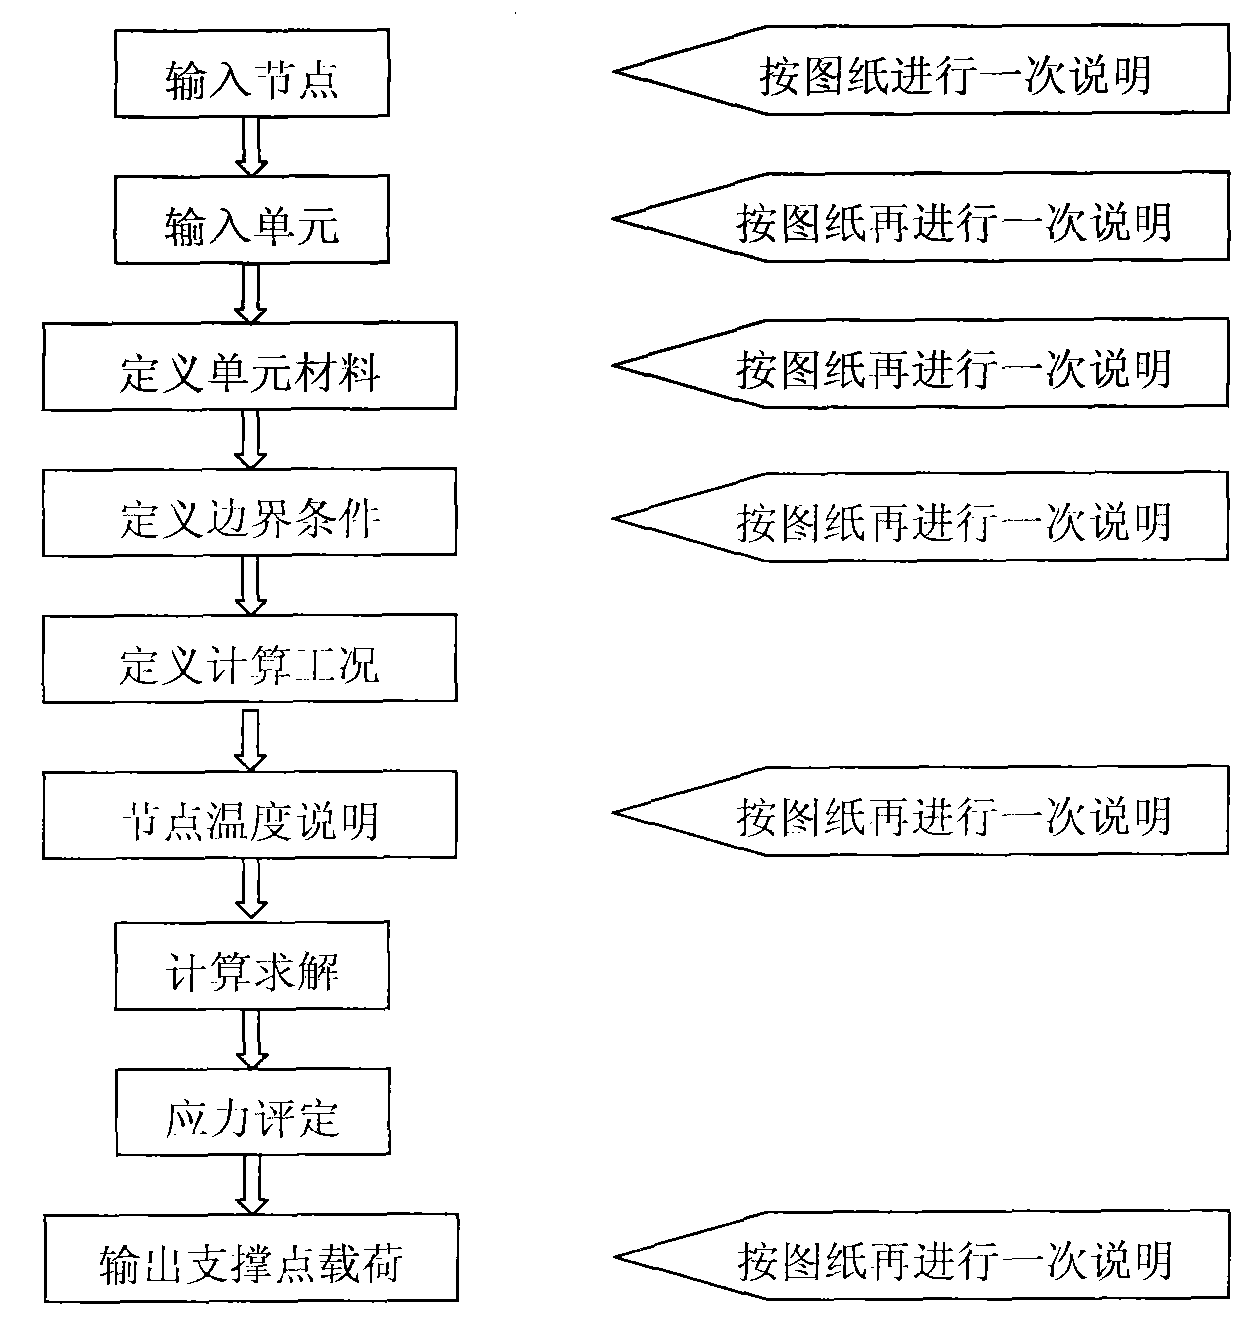 Method for manufacturing finite element method mechanical computation model of pipeline system